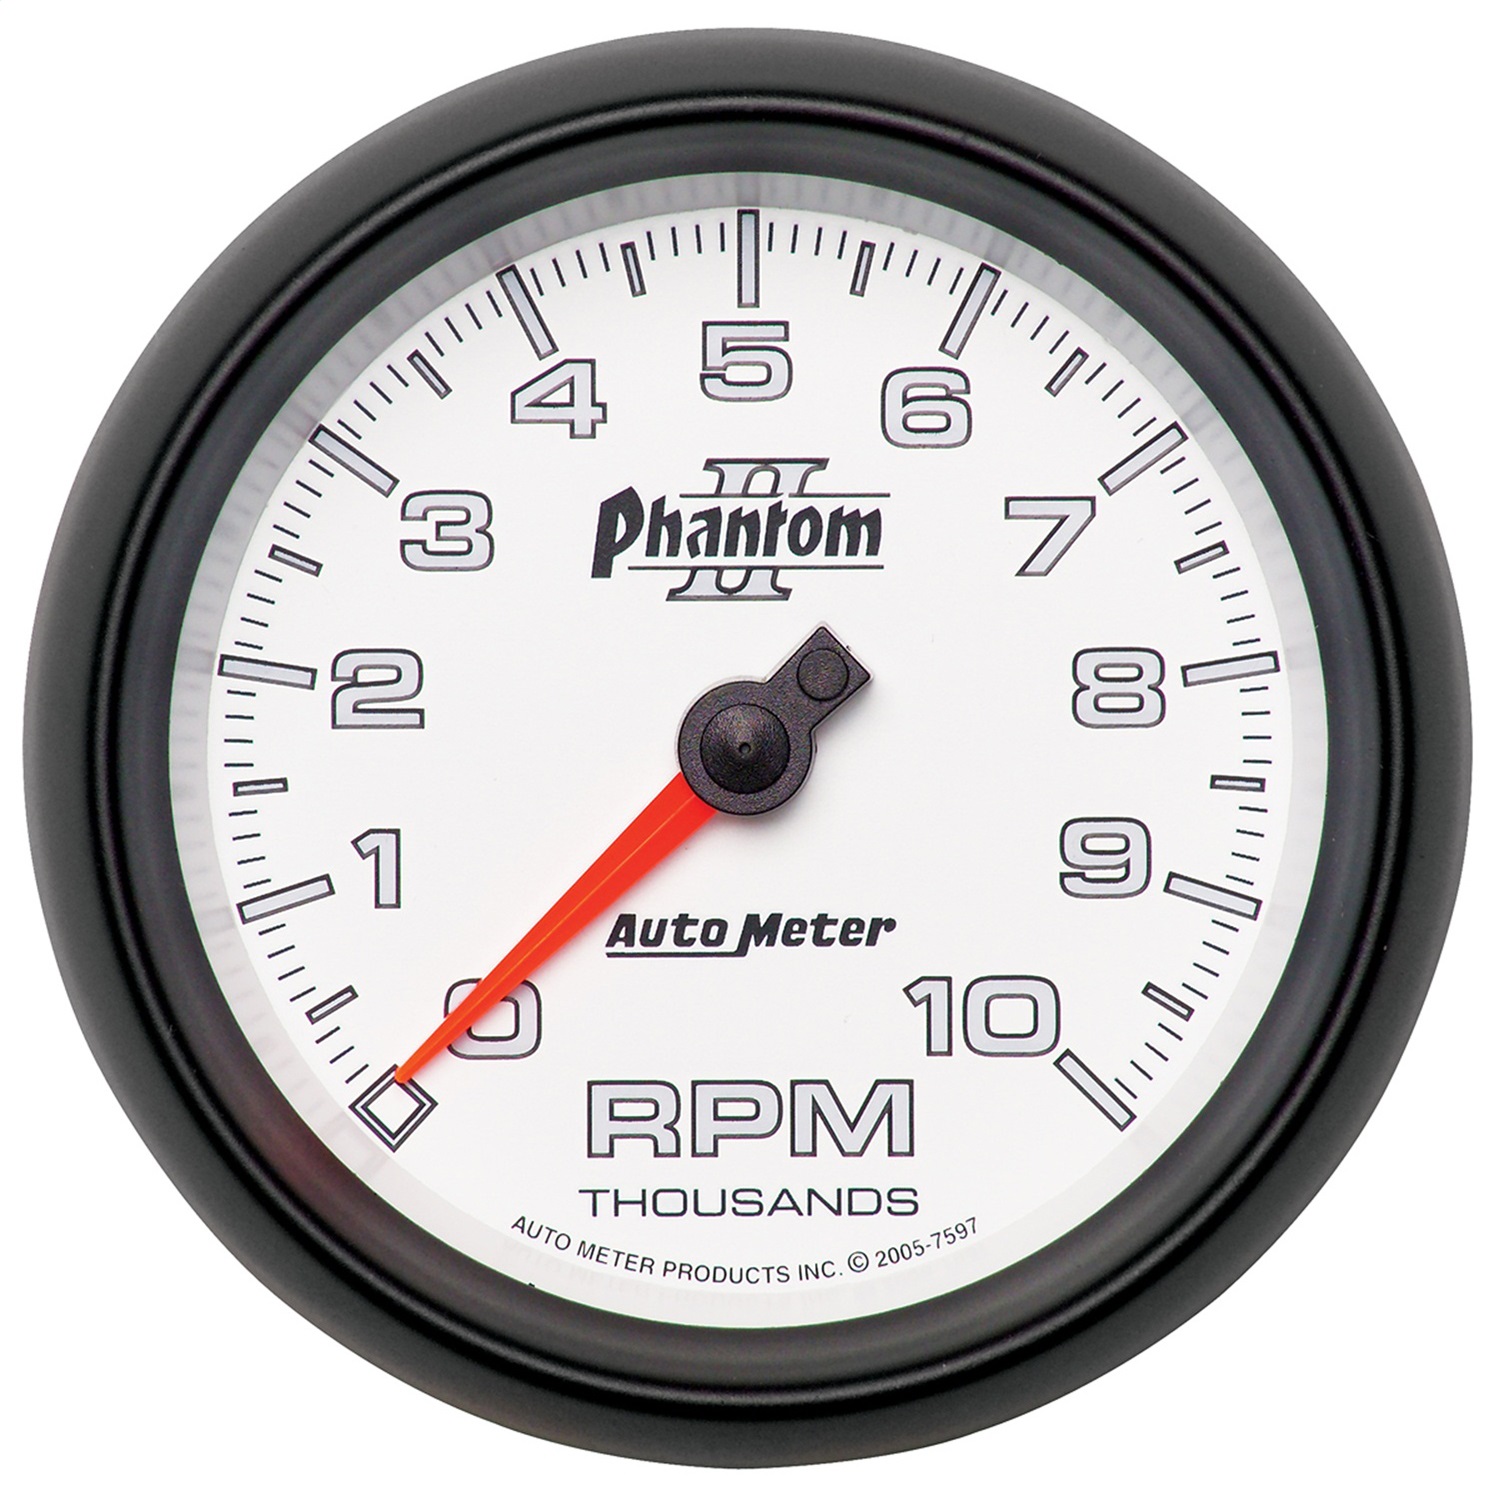 Auto Meter Auto Meter 7597 Phantom II; In-Dash Tachometer